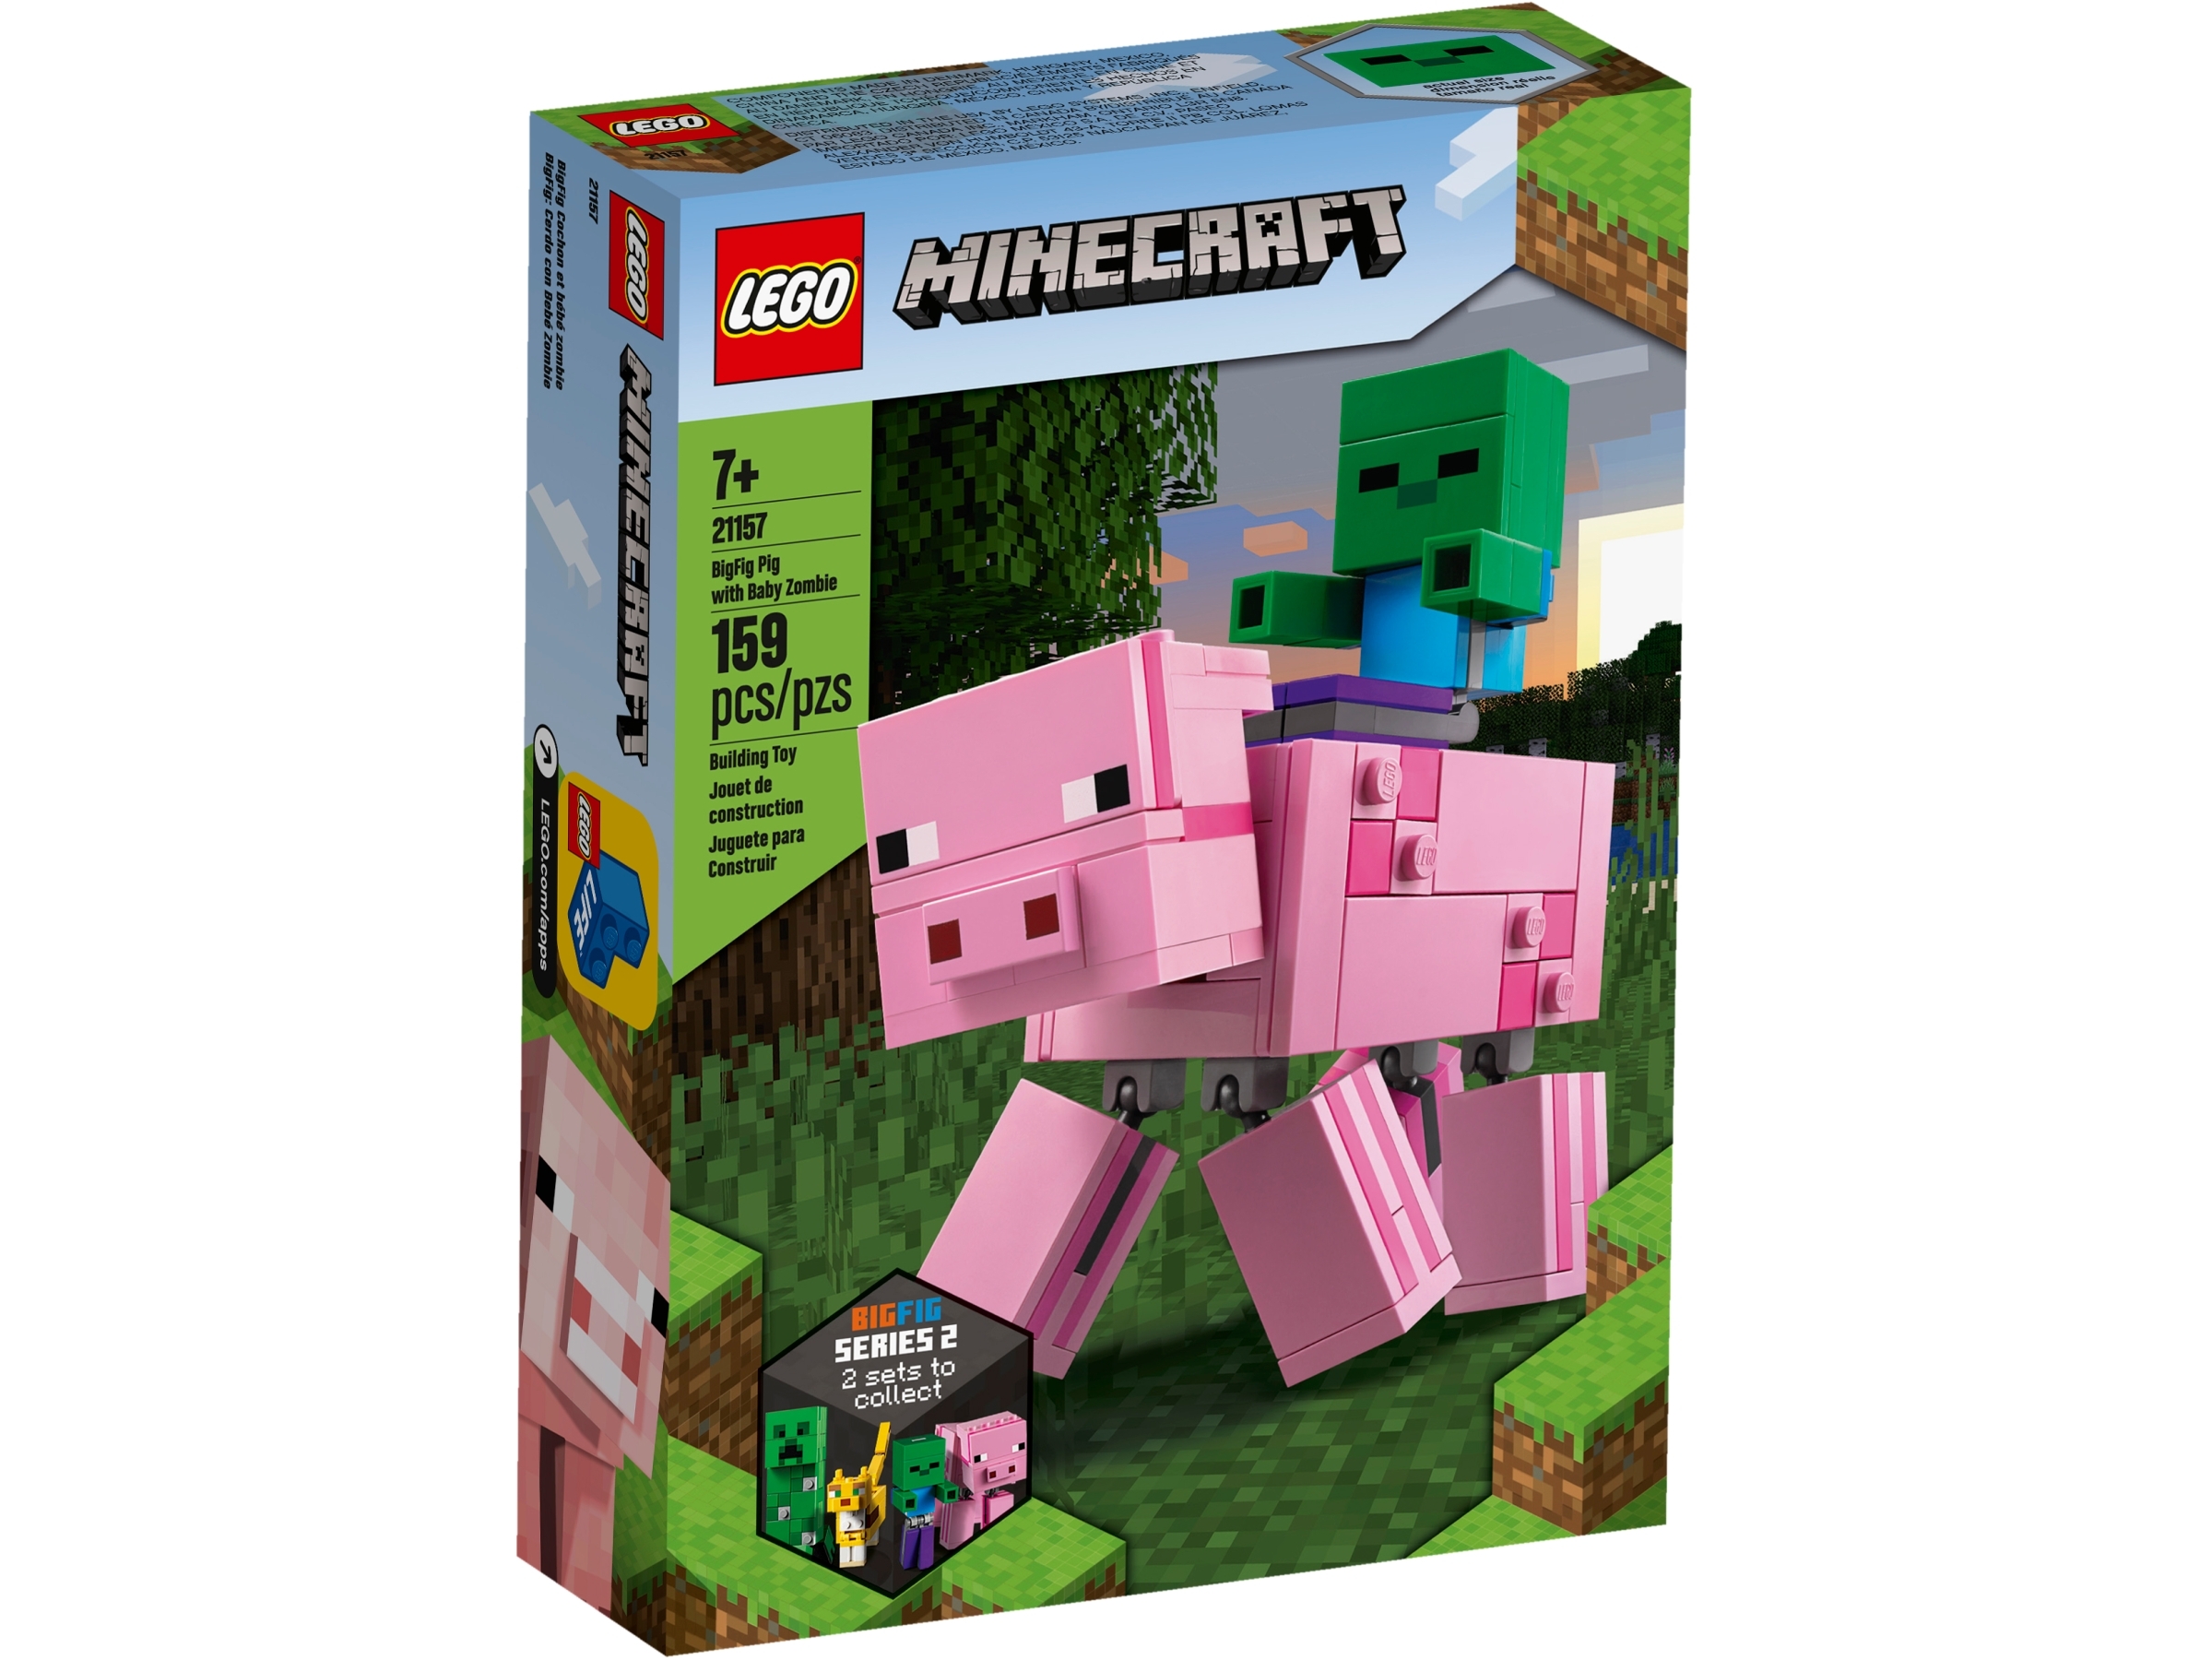 Lego Minecraft 21157 Big Fig Series 2 Brand New Sealed Box Free Shipping 